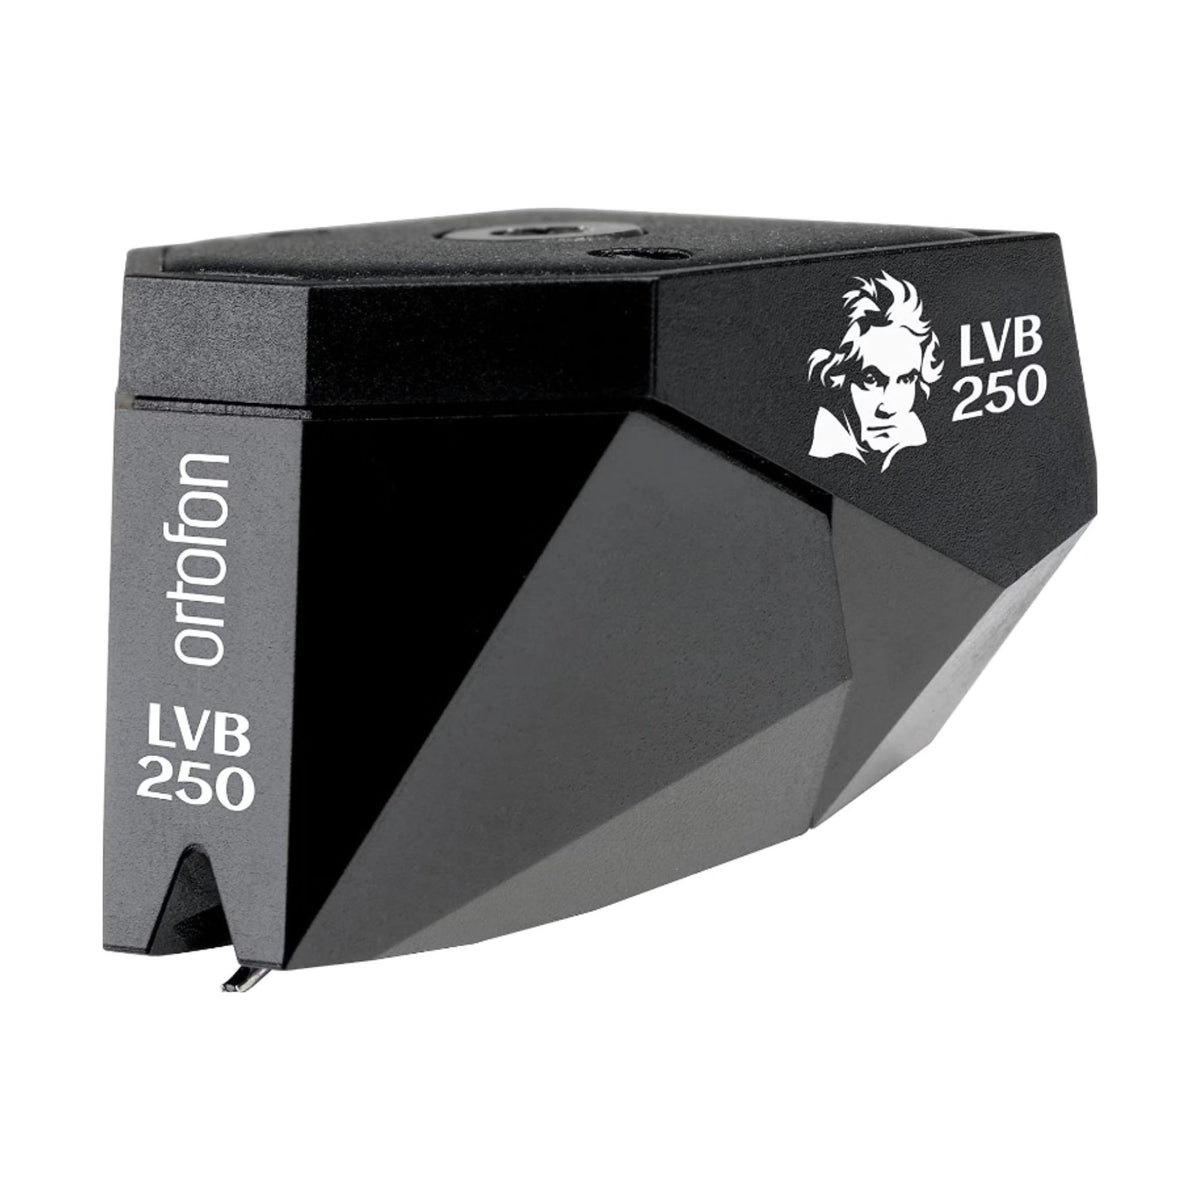 Ortofon 2M Black LVB 250 - Moving Magnet Cartridge, Ortofon, Turntable Accessories - AVStore.in